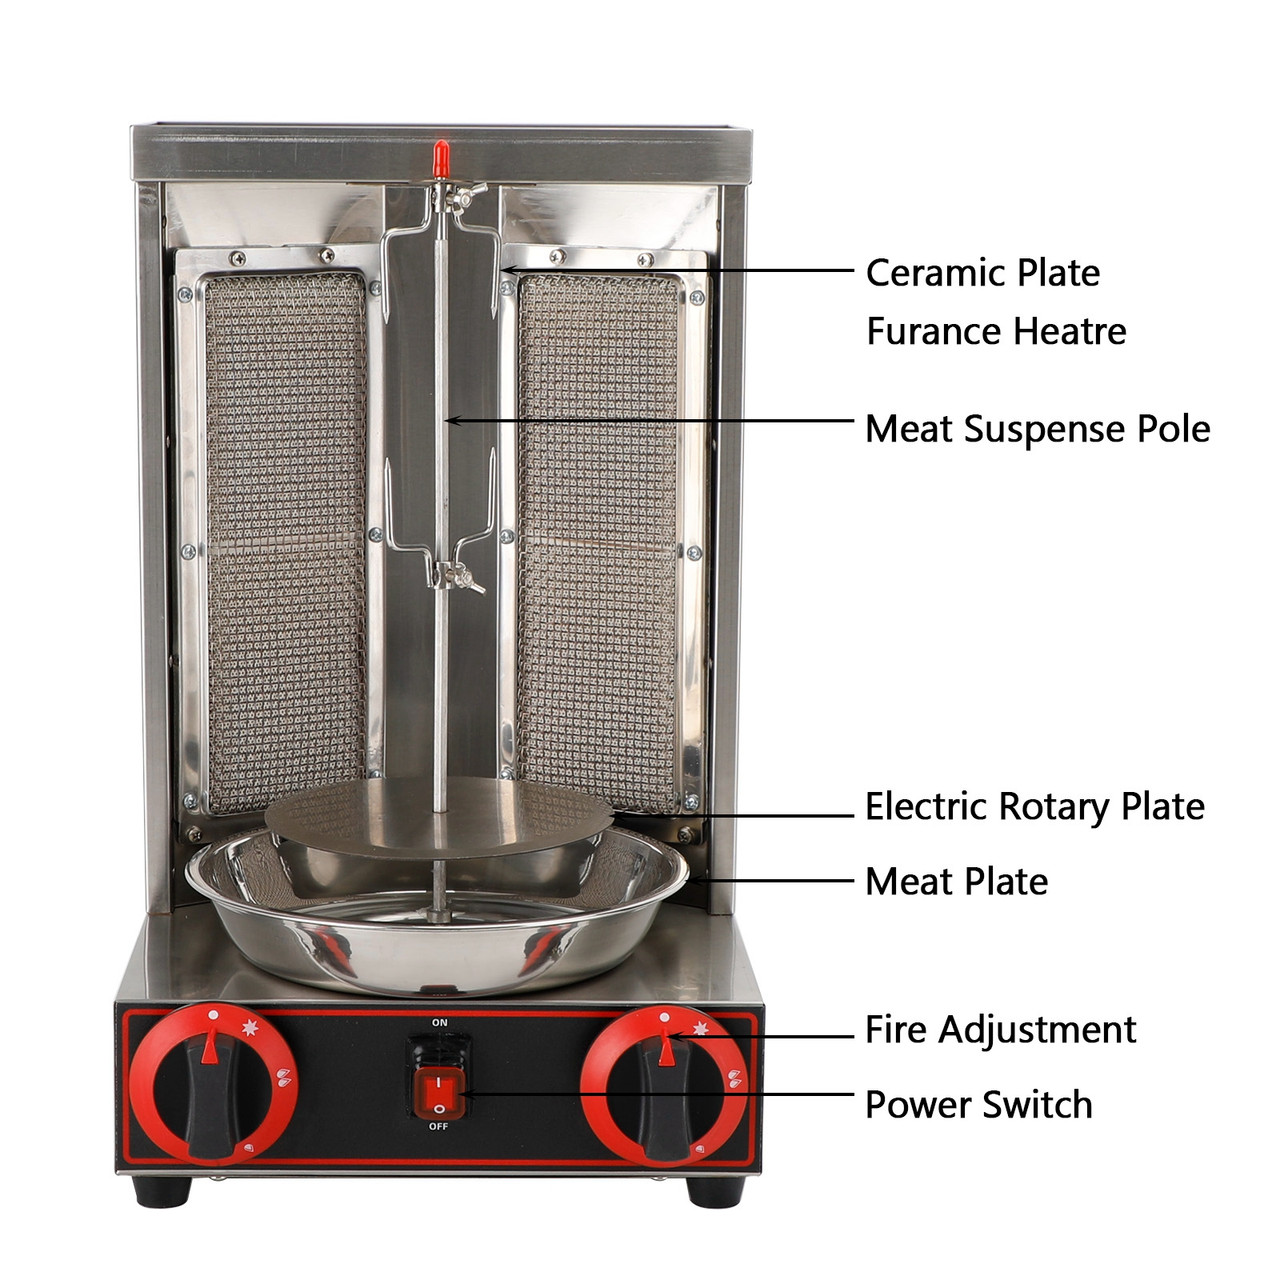 110V Spinning Doner Kebab Grill Machine Gas Vertical Broiler Shawarma Machine